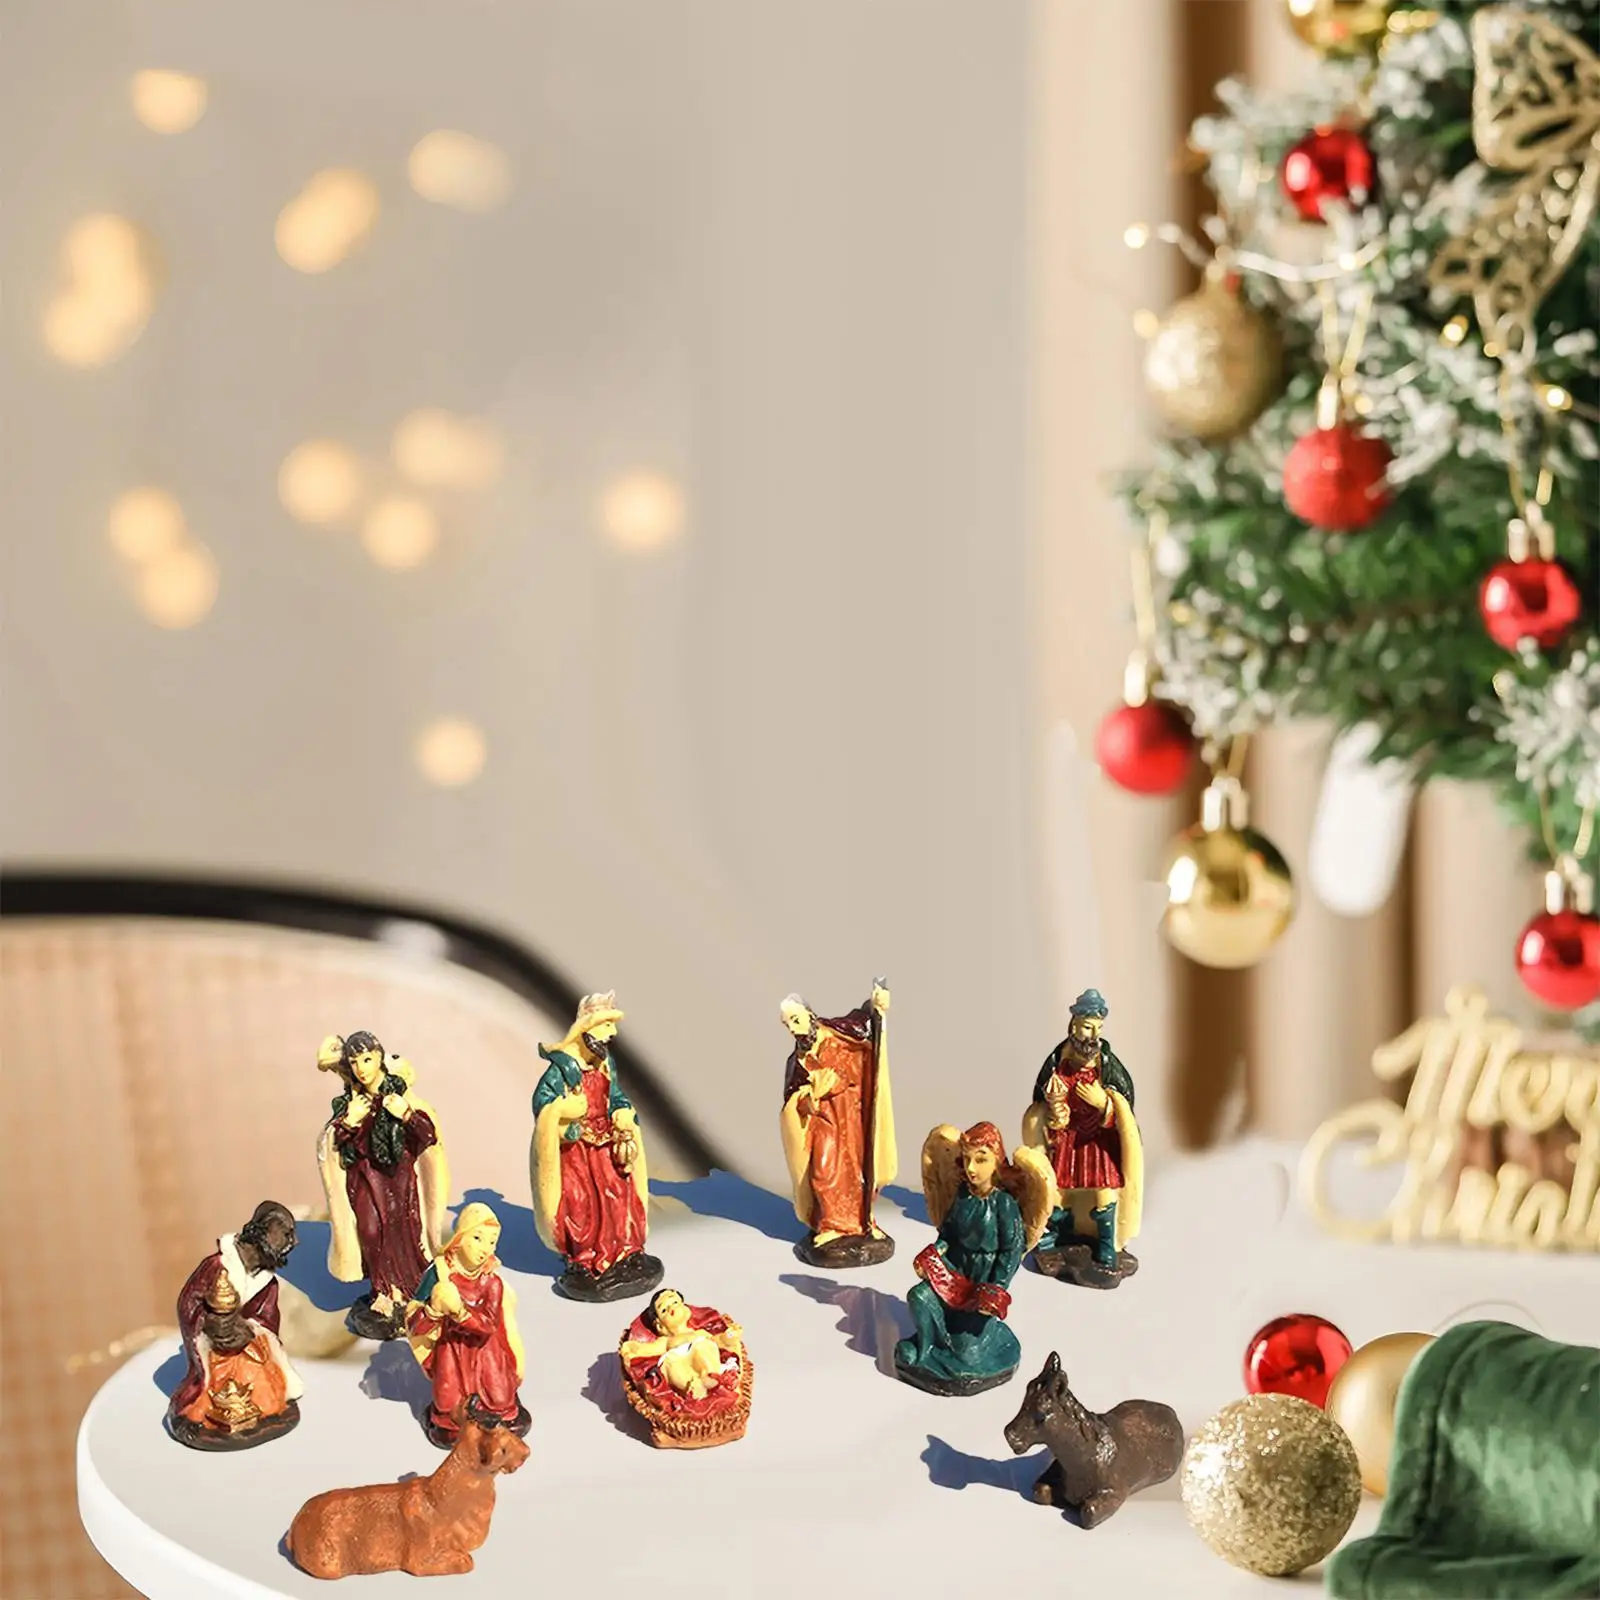 10x Nativity Figures Set Decoration Portable Hand Painted Holiday Season Decor Birth of Jesus Ornament for School Decoration